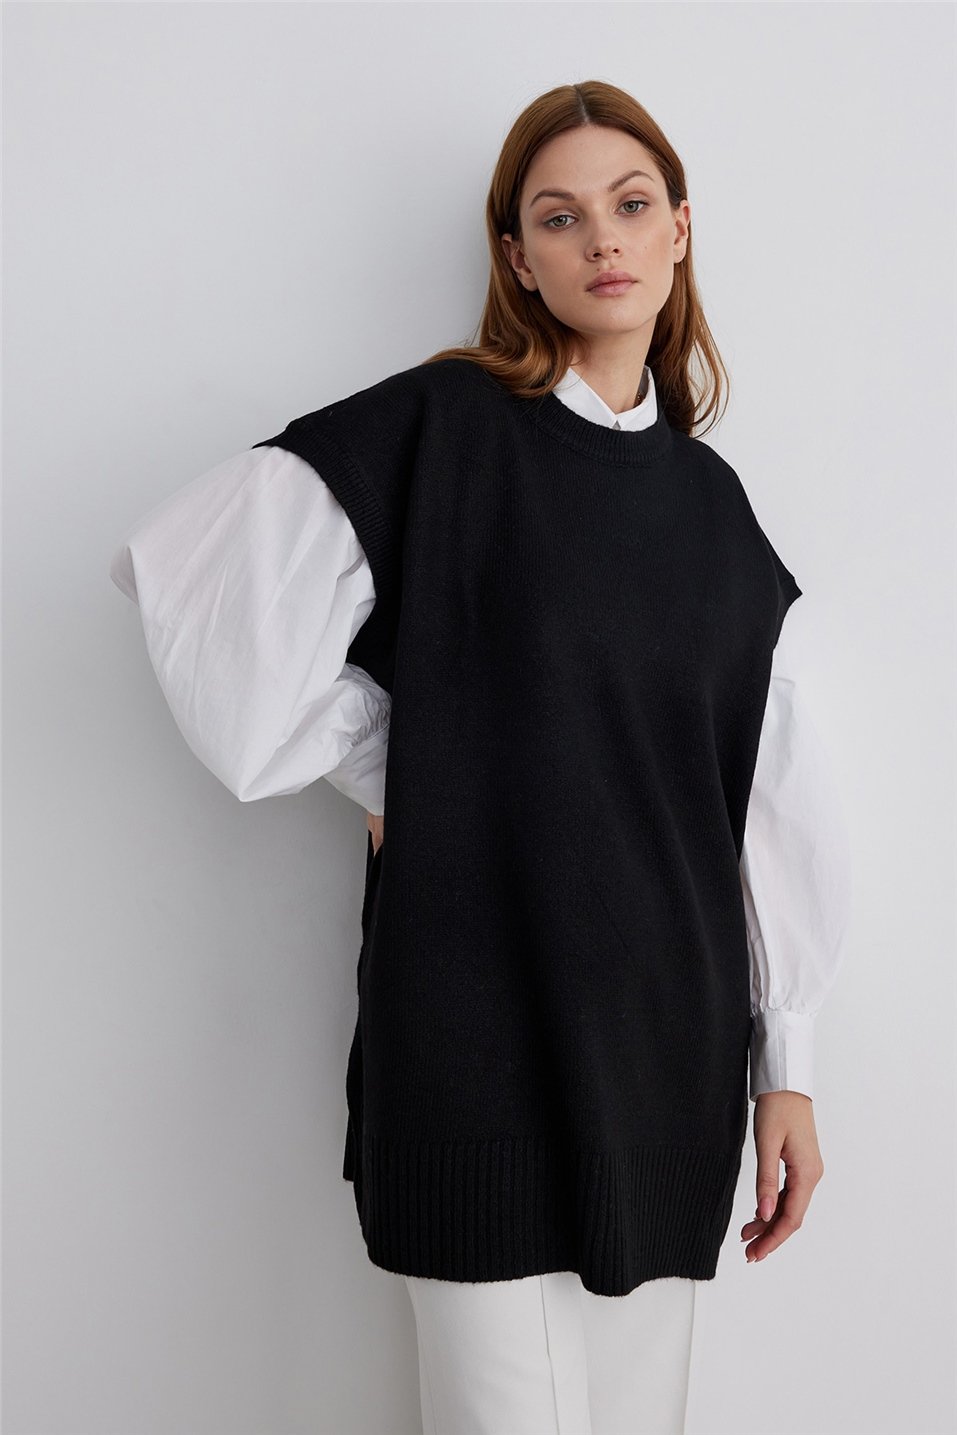 Black Soft Textured Knitwear Sweater